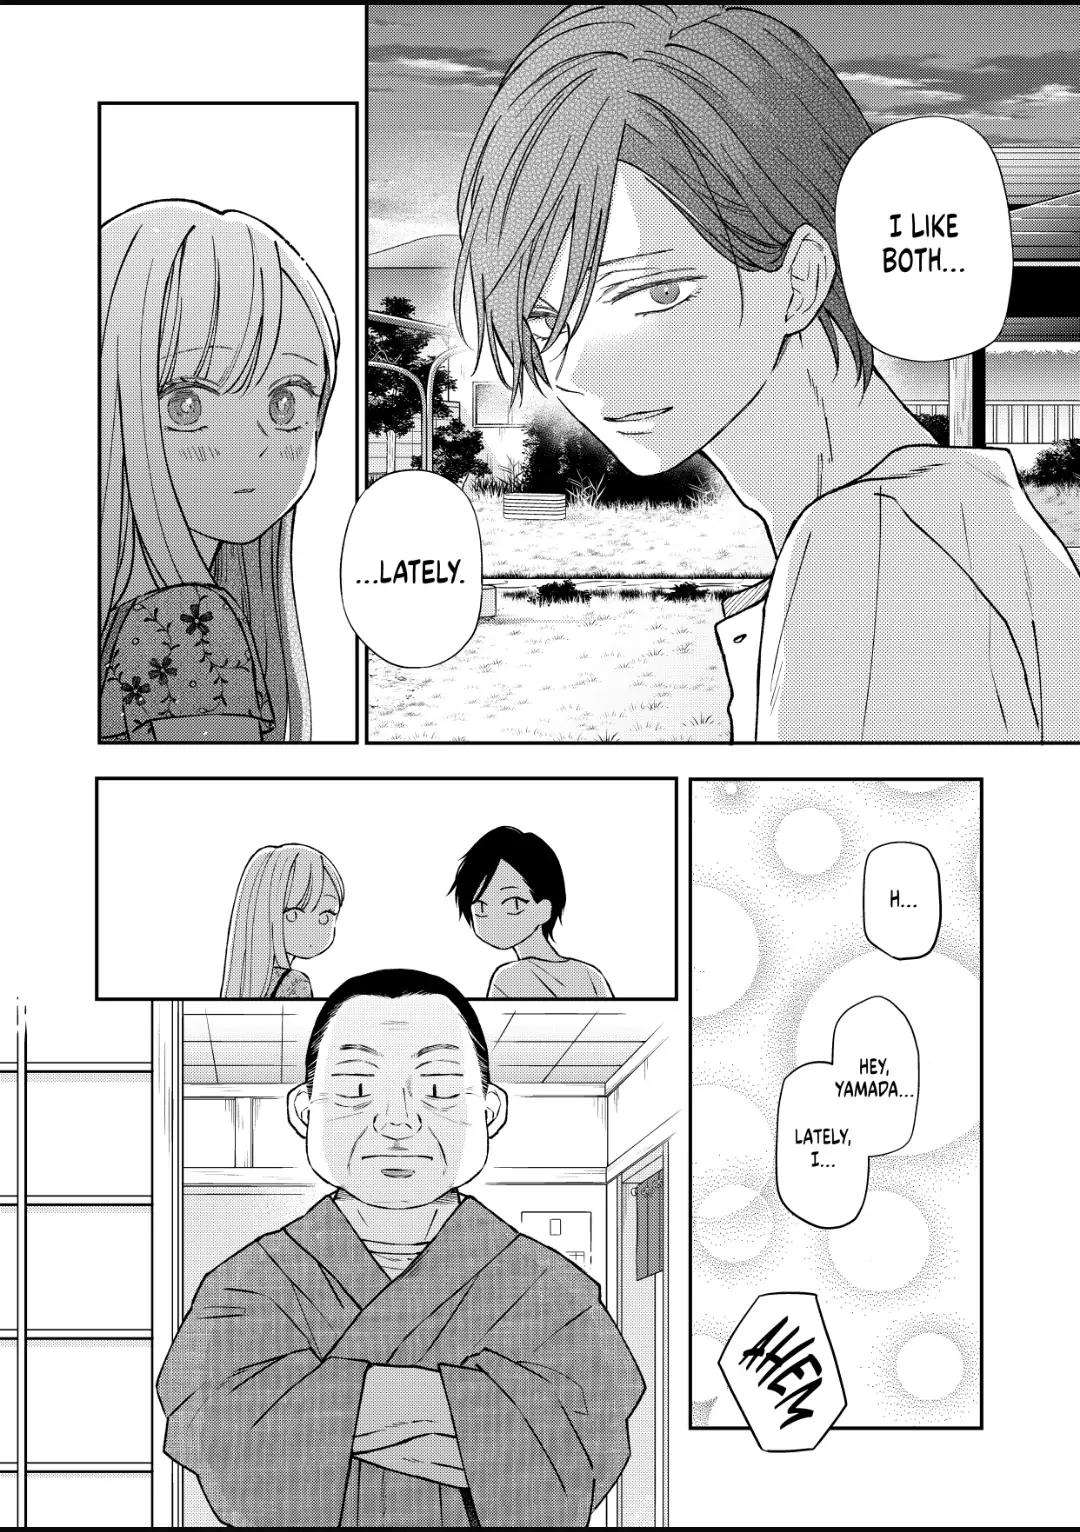 Read My Lv999 Love for Yamada-kun Manga English [New Chapters] Online Free  - MangaClash